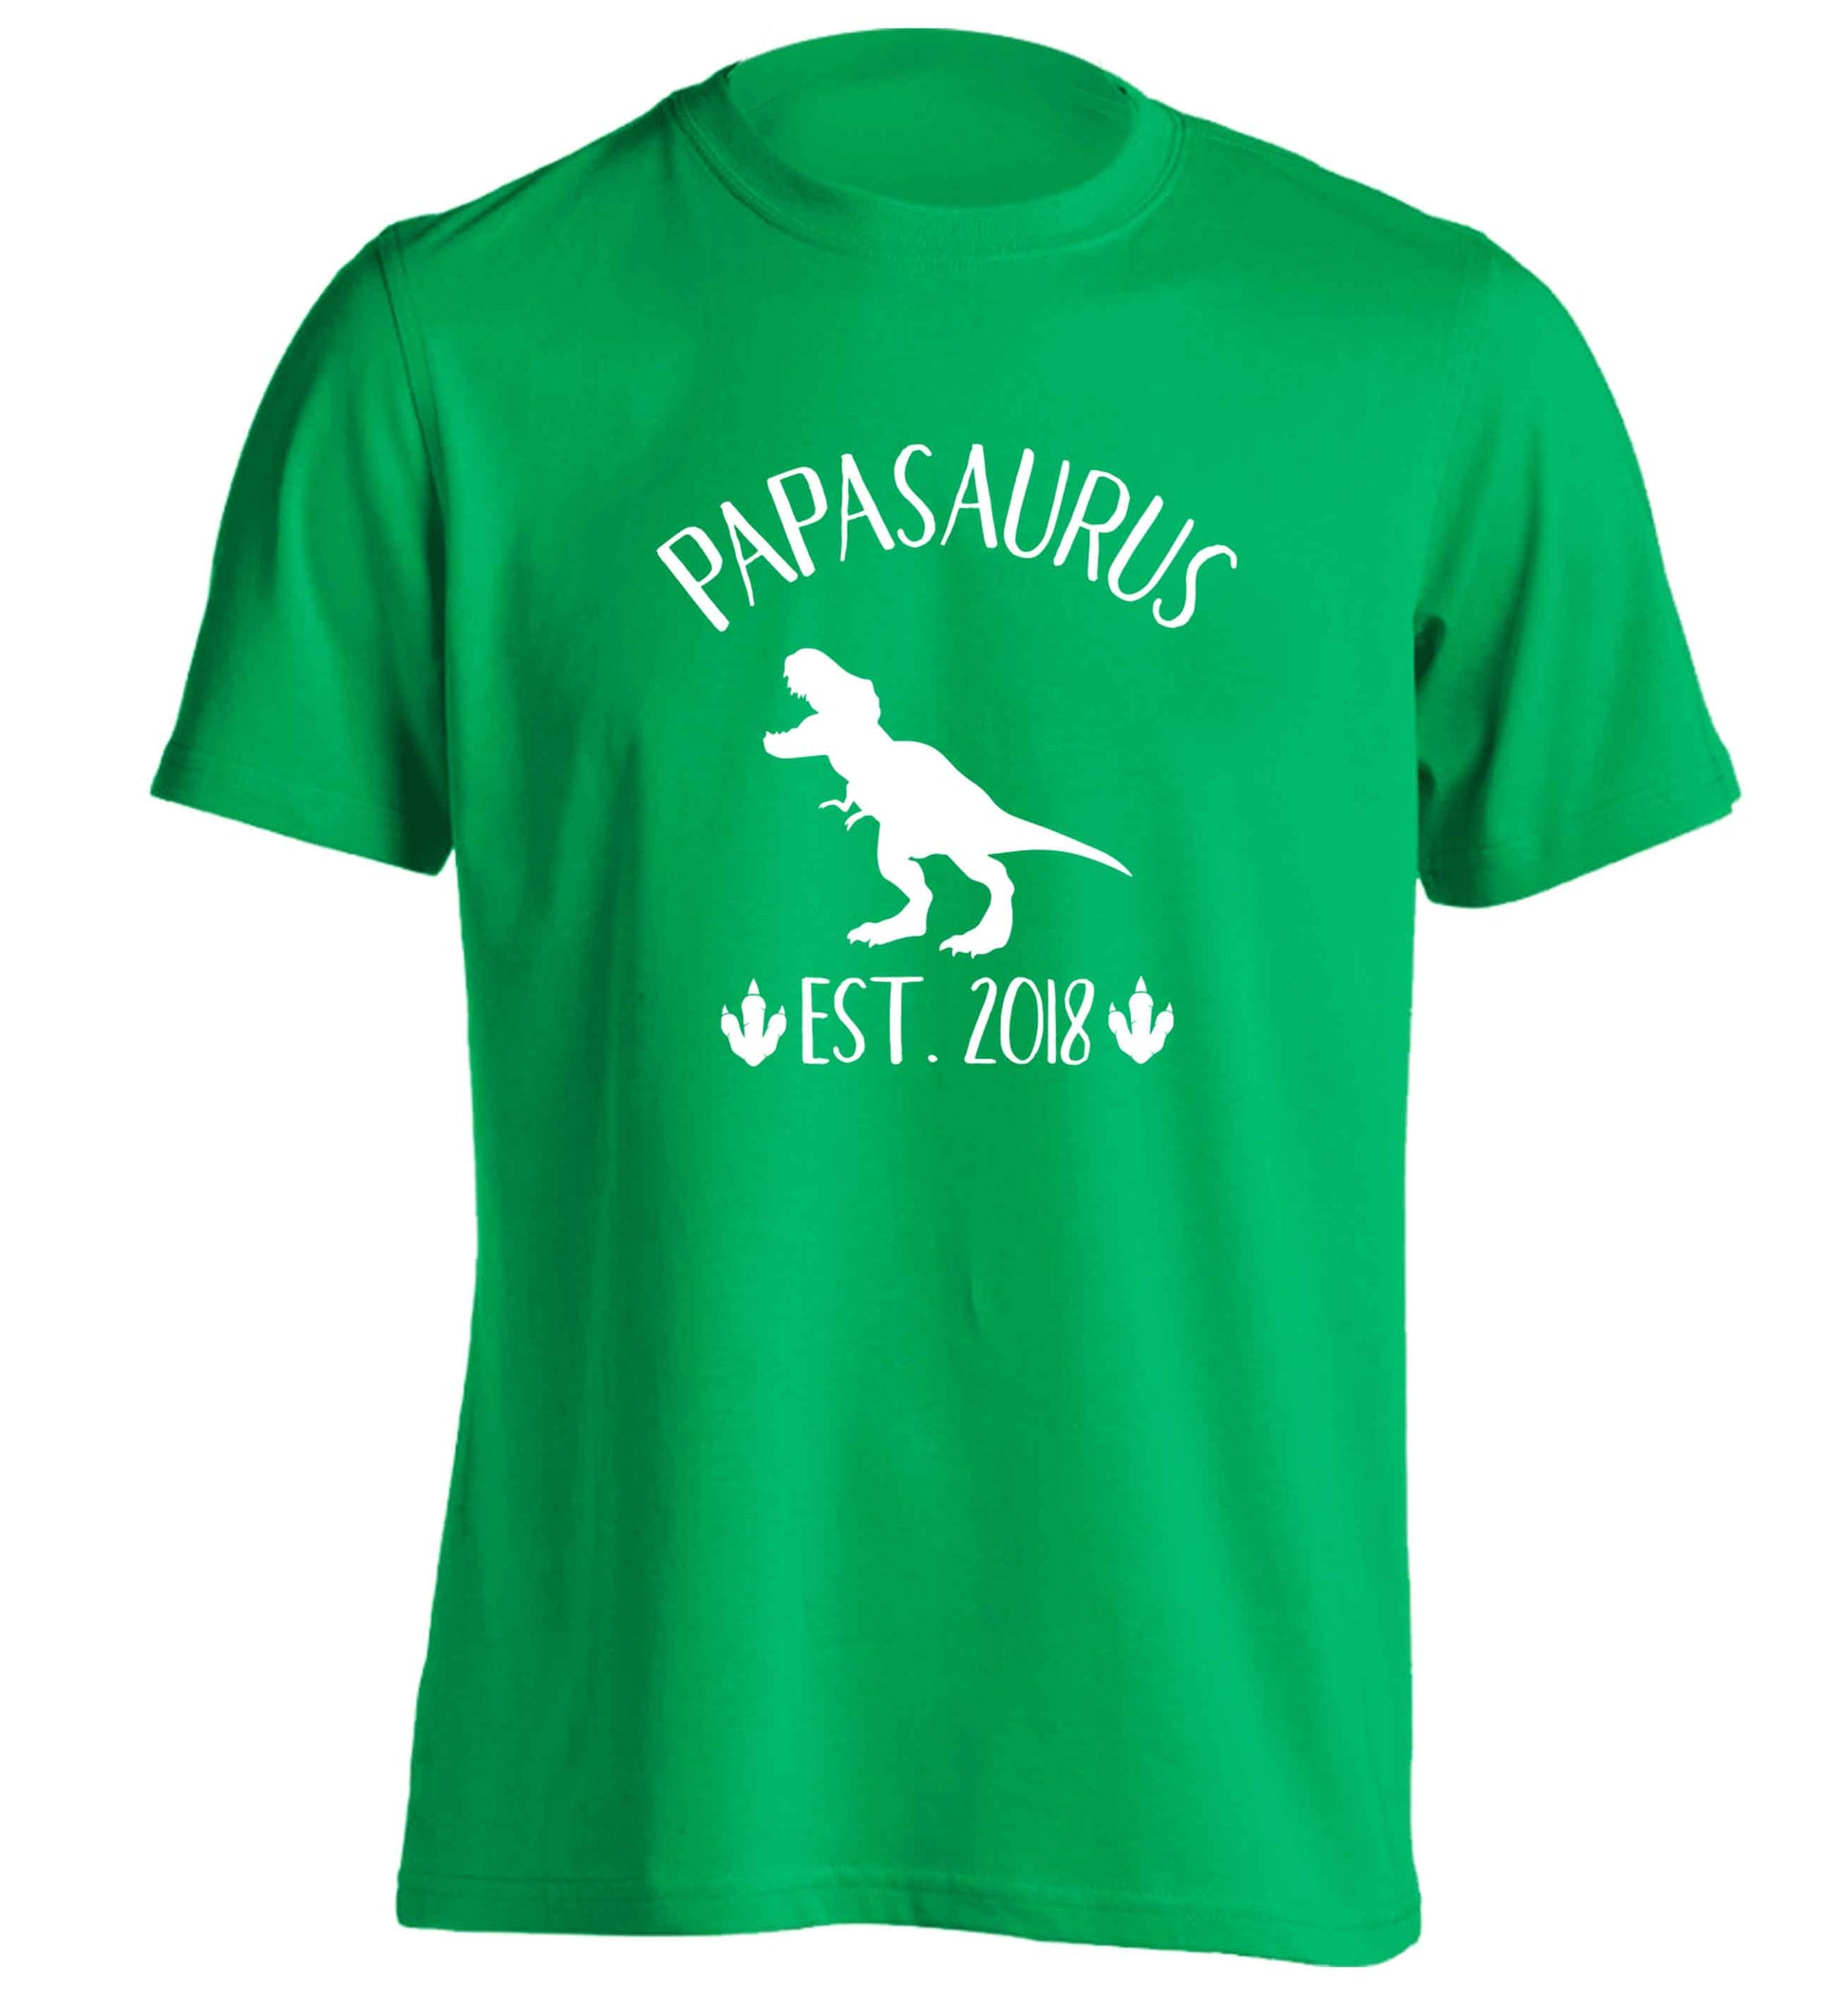 Personalised papasaurus since (custom date) adults unisex green Tshirt 2XL